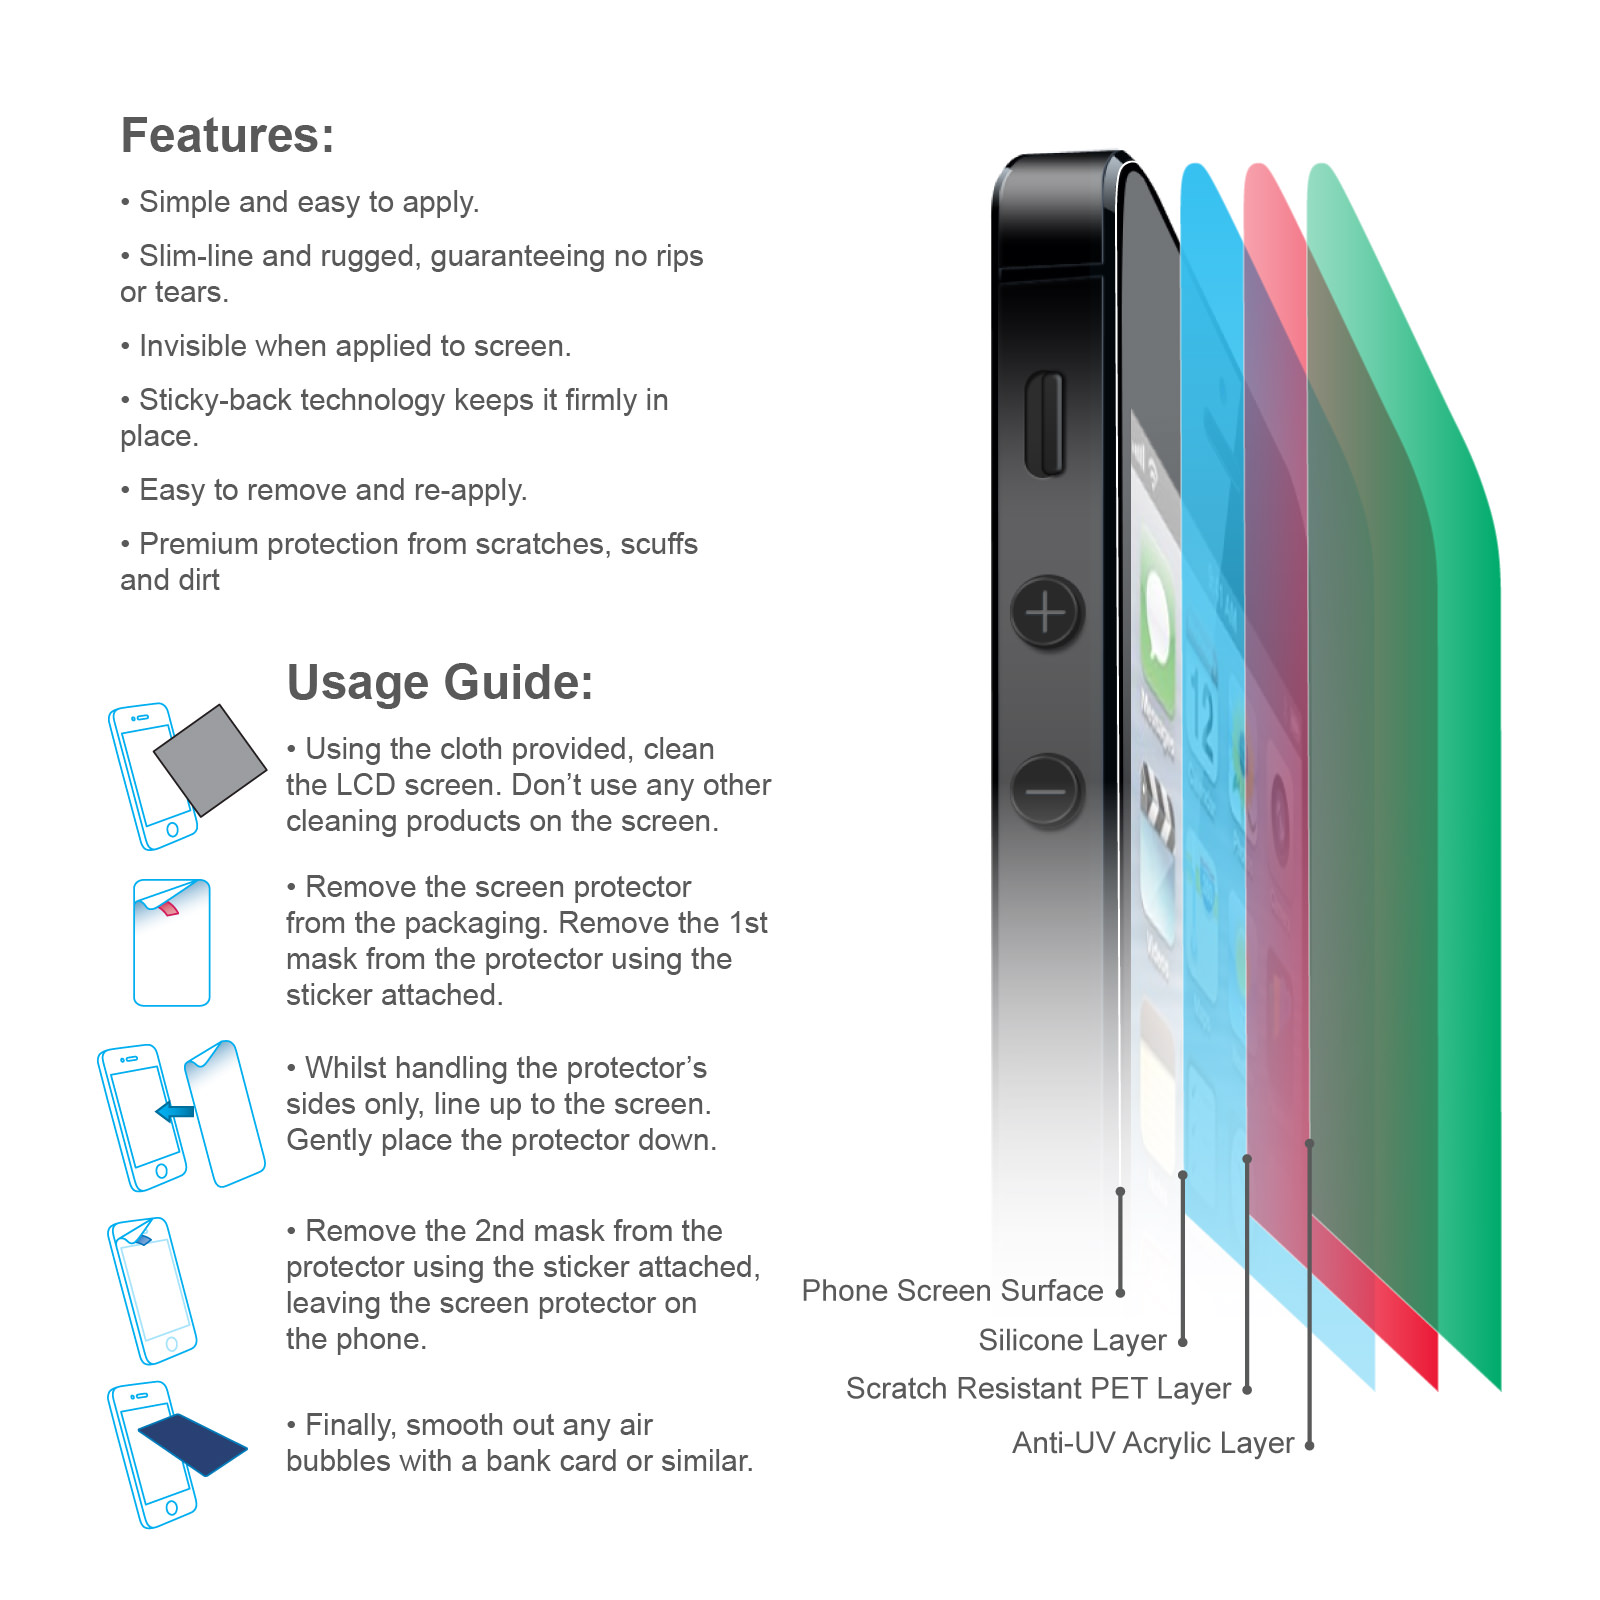 YouSave Samsung Galaxy A5 Screen Protectors x5